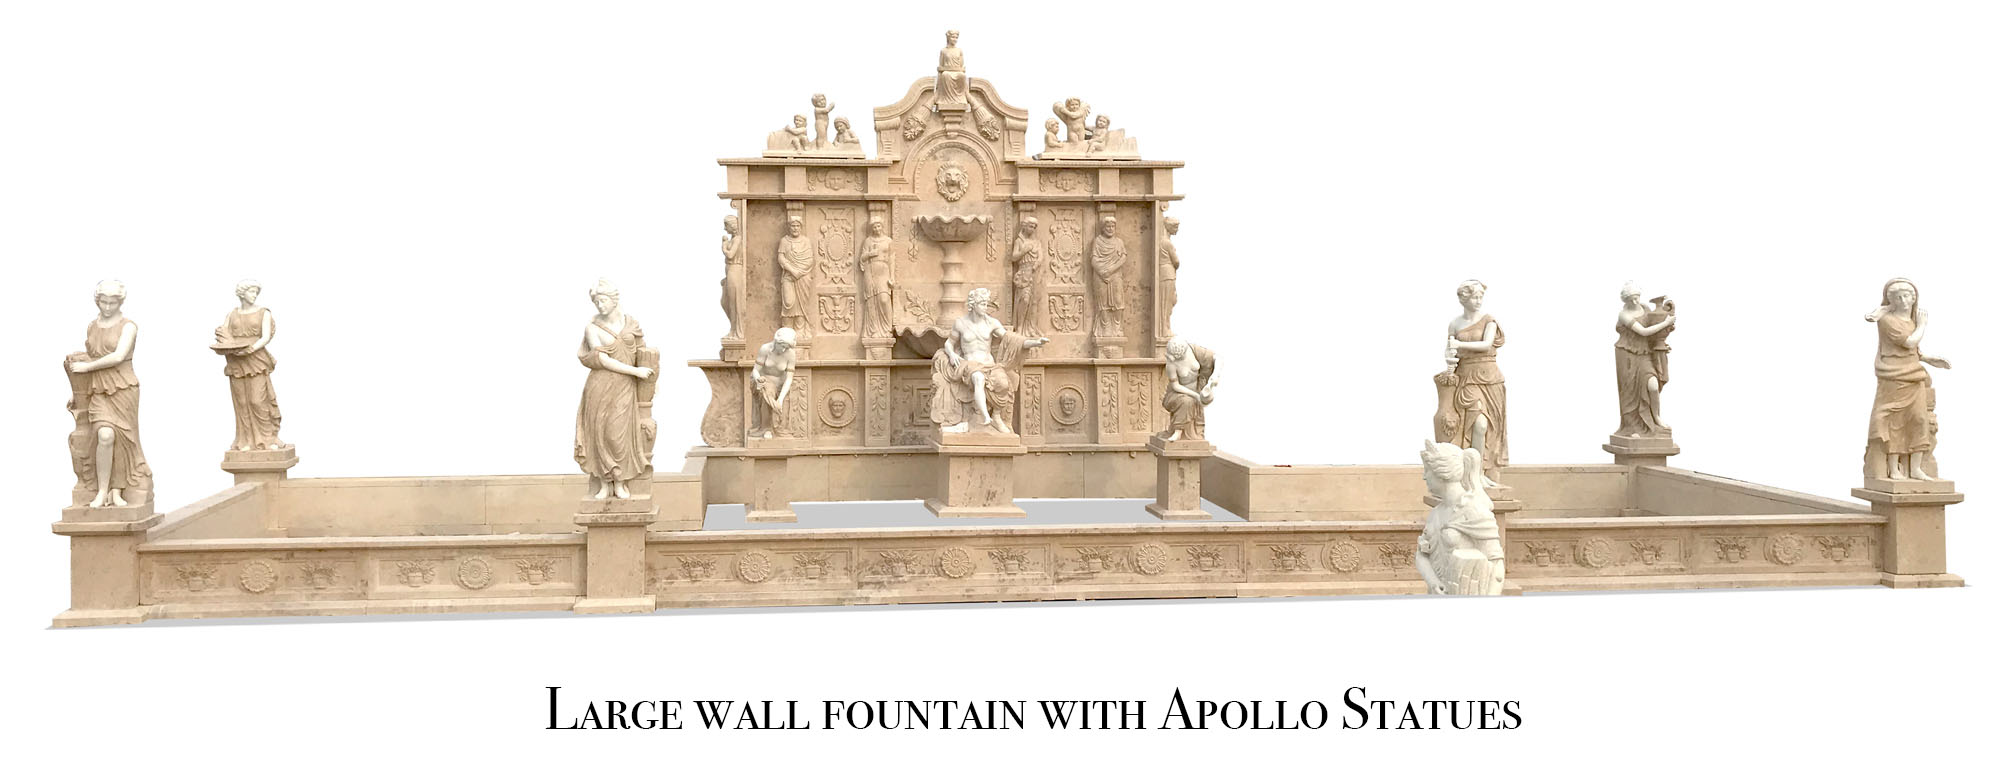 Apollo bath large wall fountain